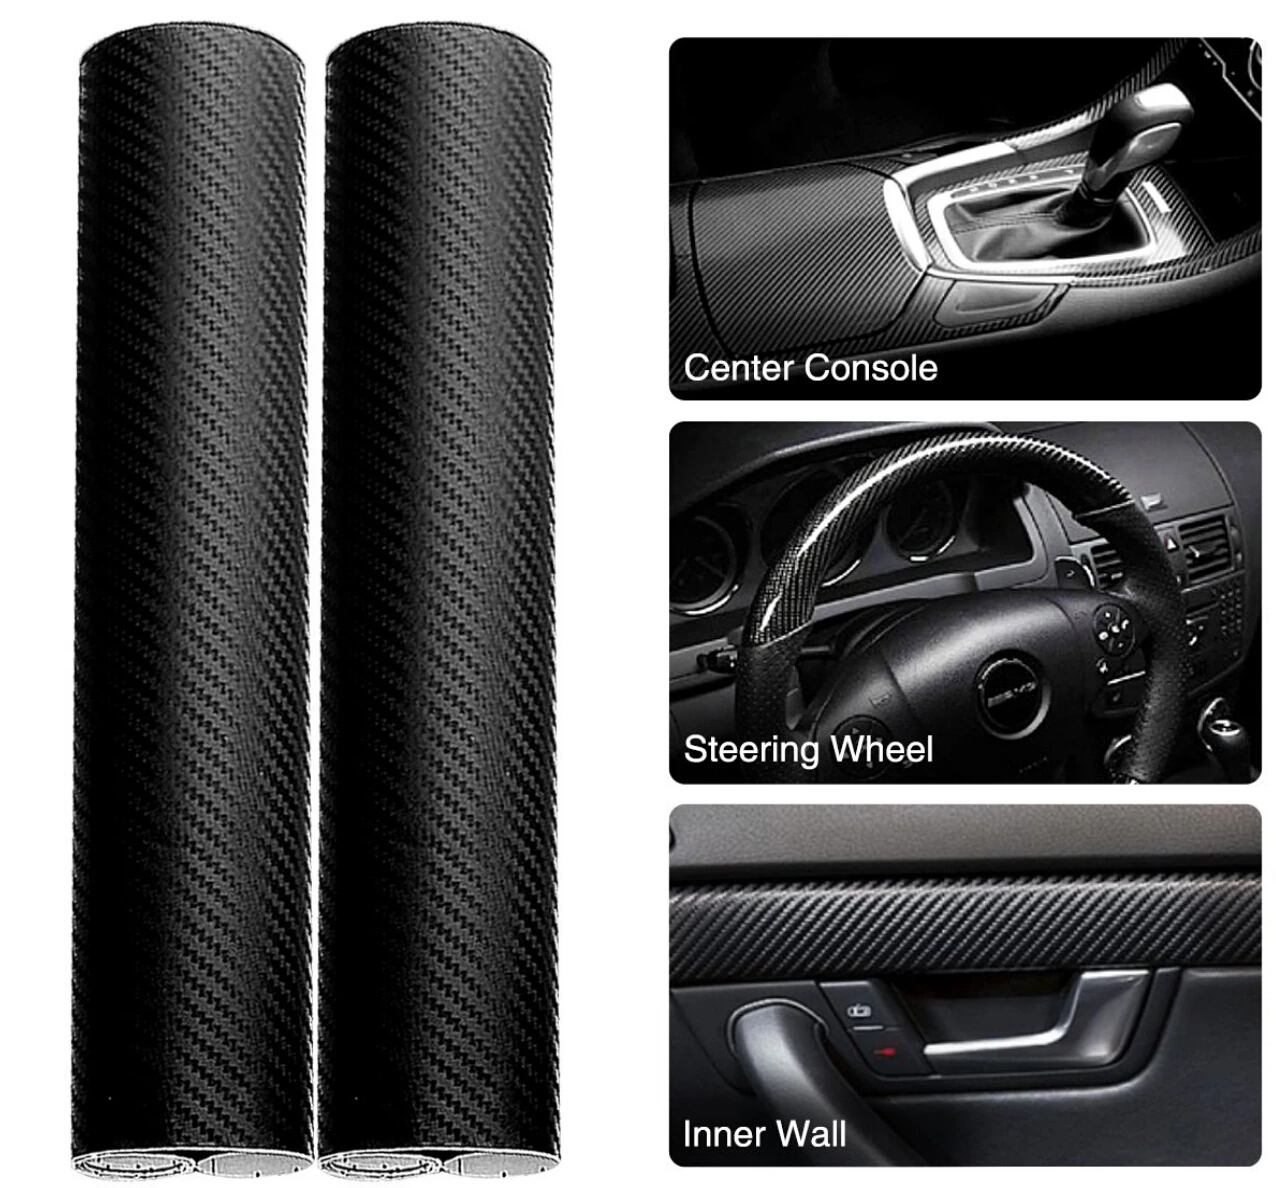 3D Carbon Fiber Car Stickers Decals 2019 hot for ford focus 2 kia rio chevrolet cruze toyota solaris kia ceed lada vesta lada